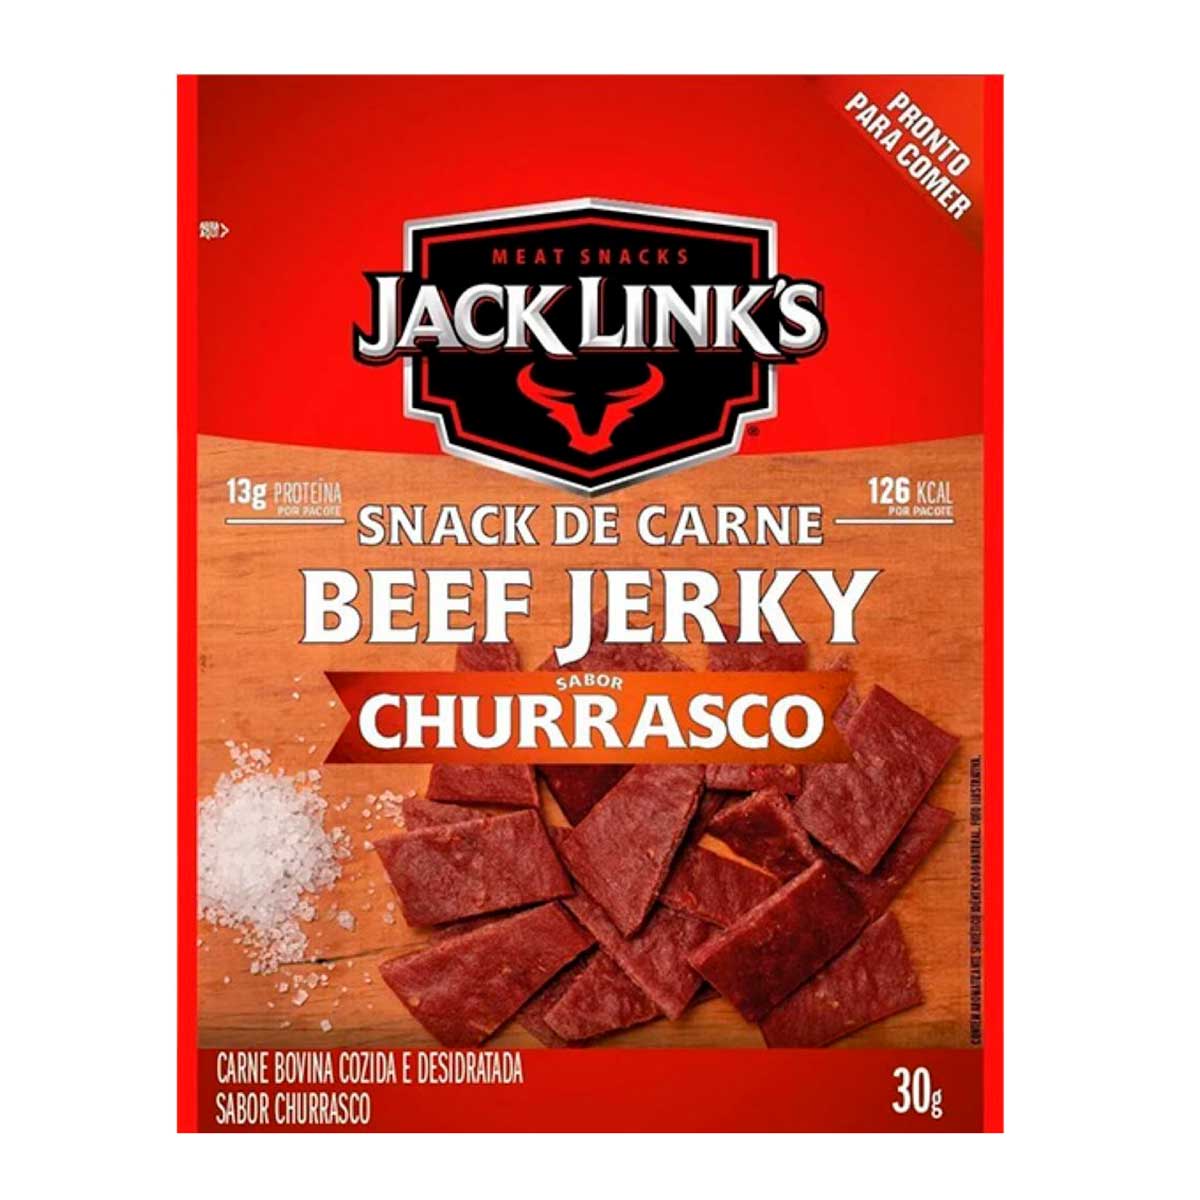 beef-jerky-churrasco-jack-links-30-g-1.jpg